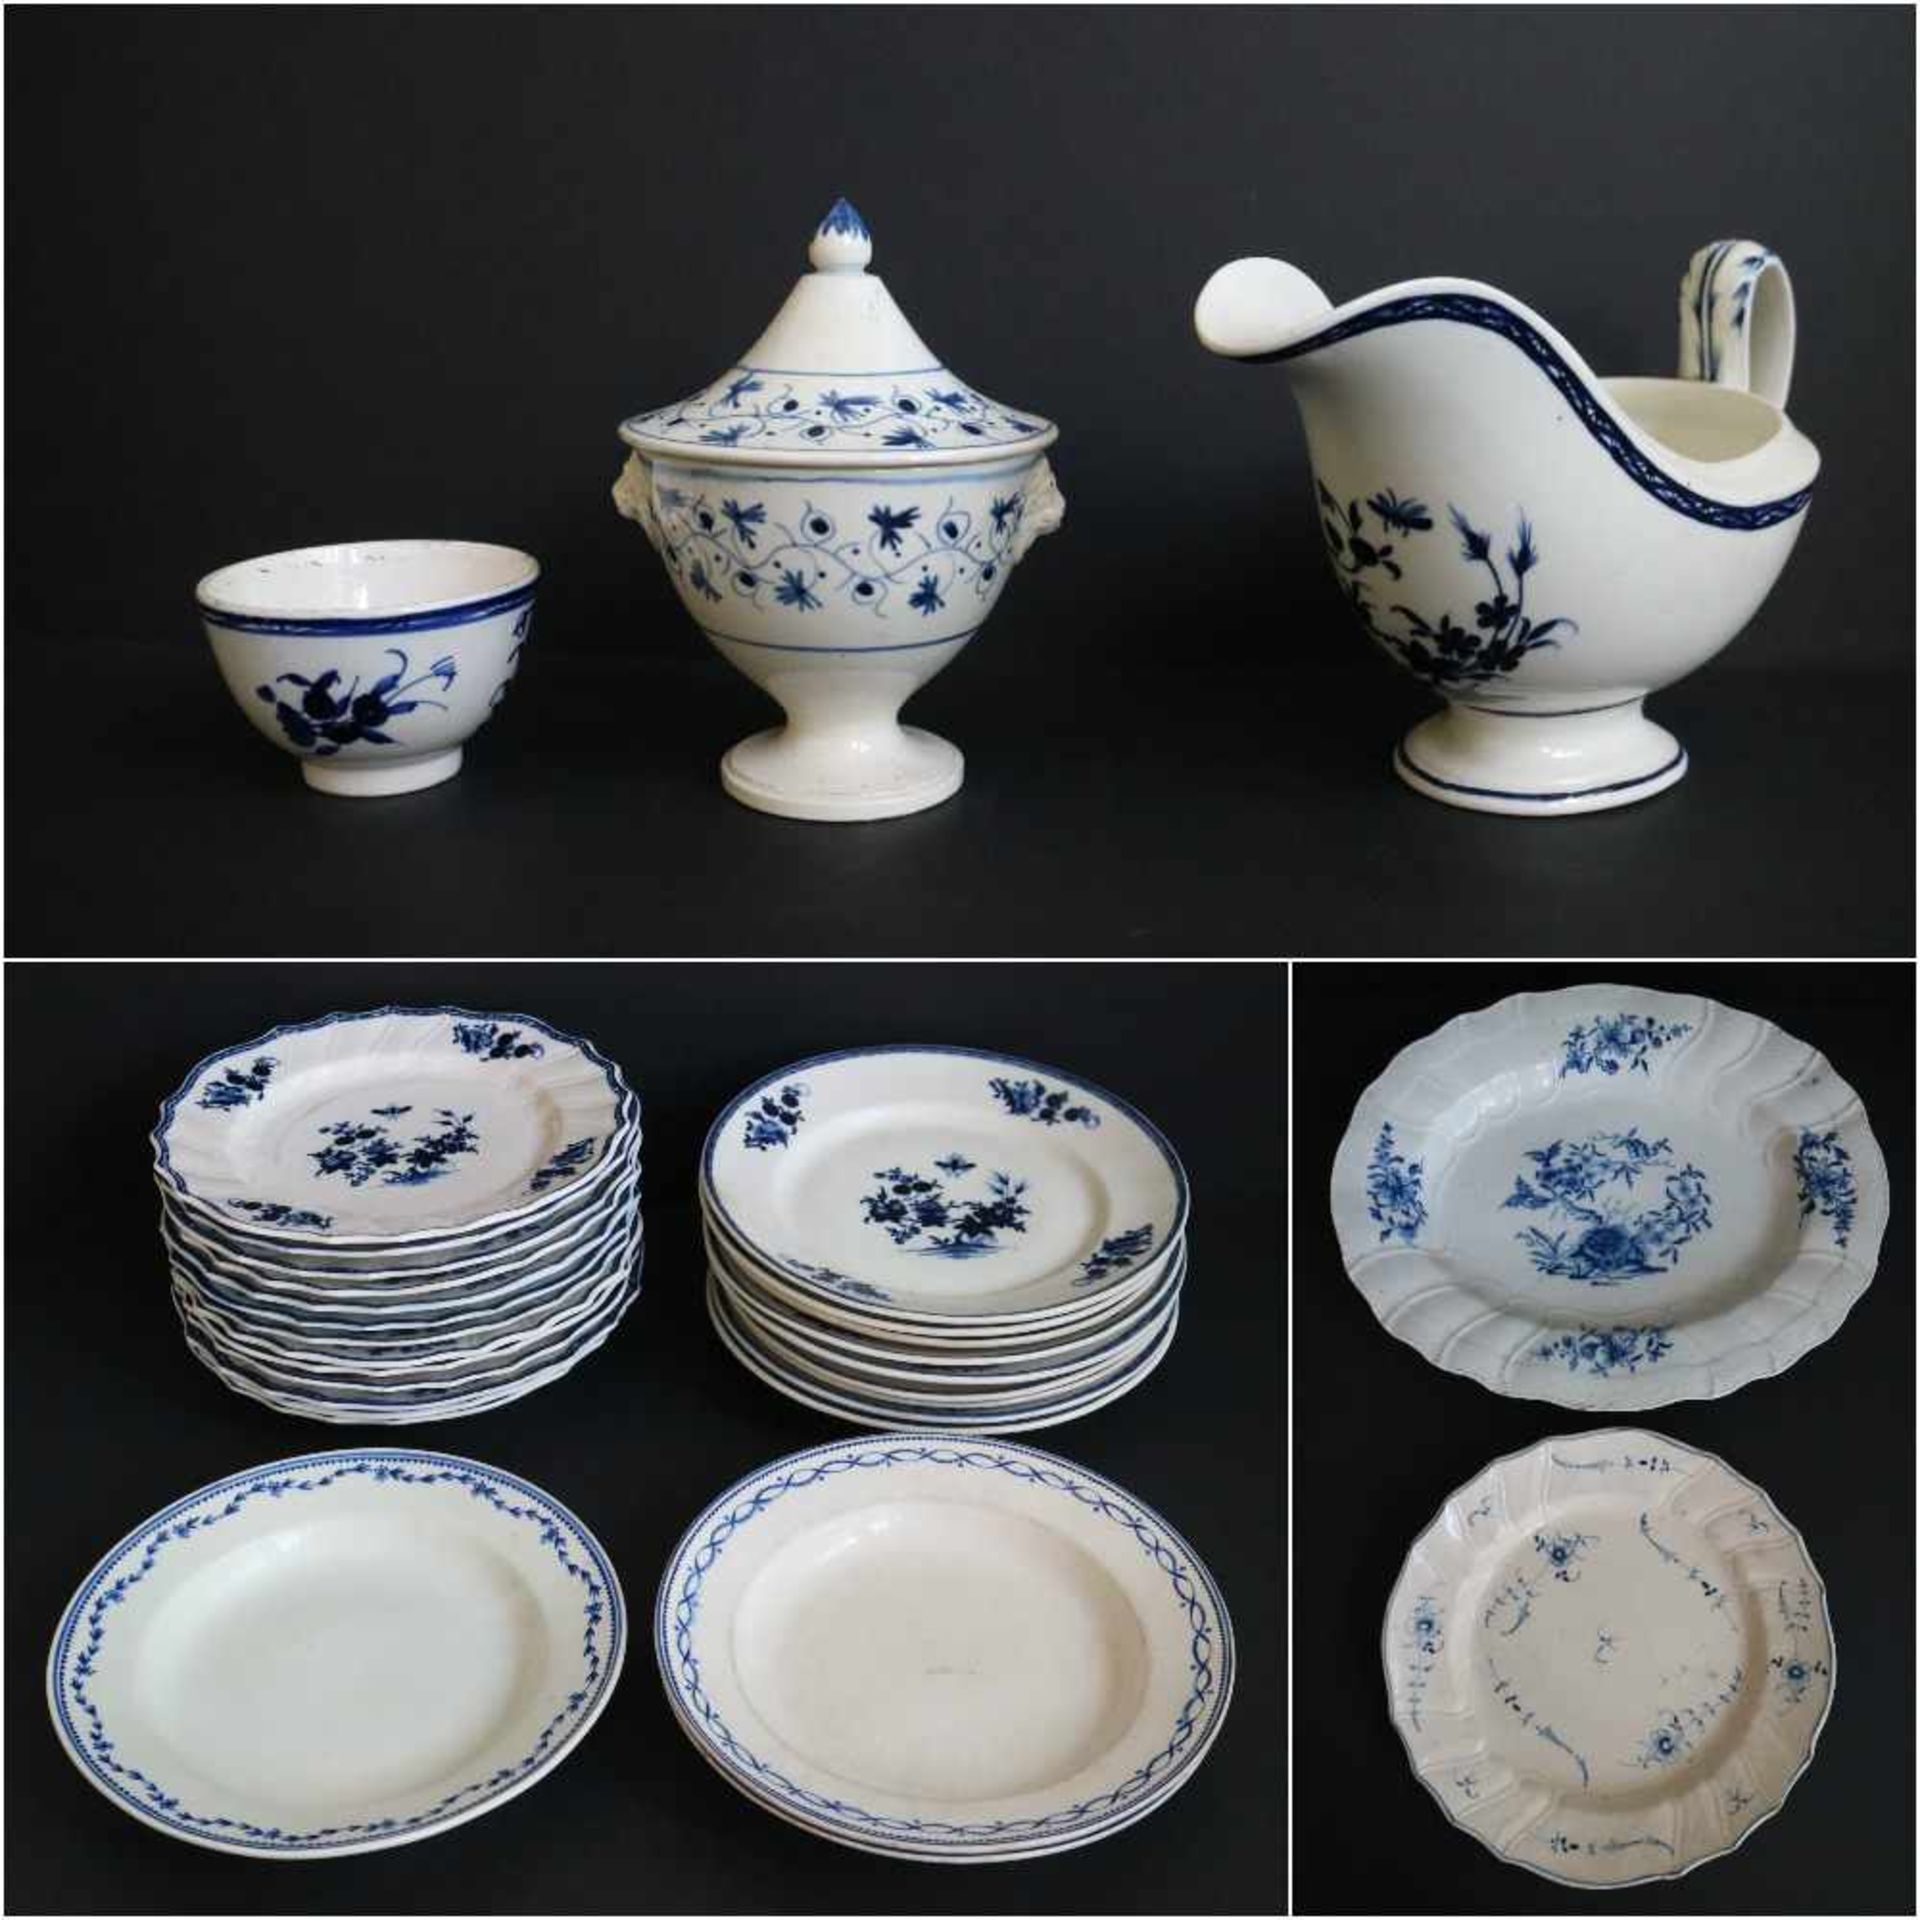 Lot of Tournai porcelain